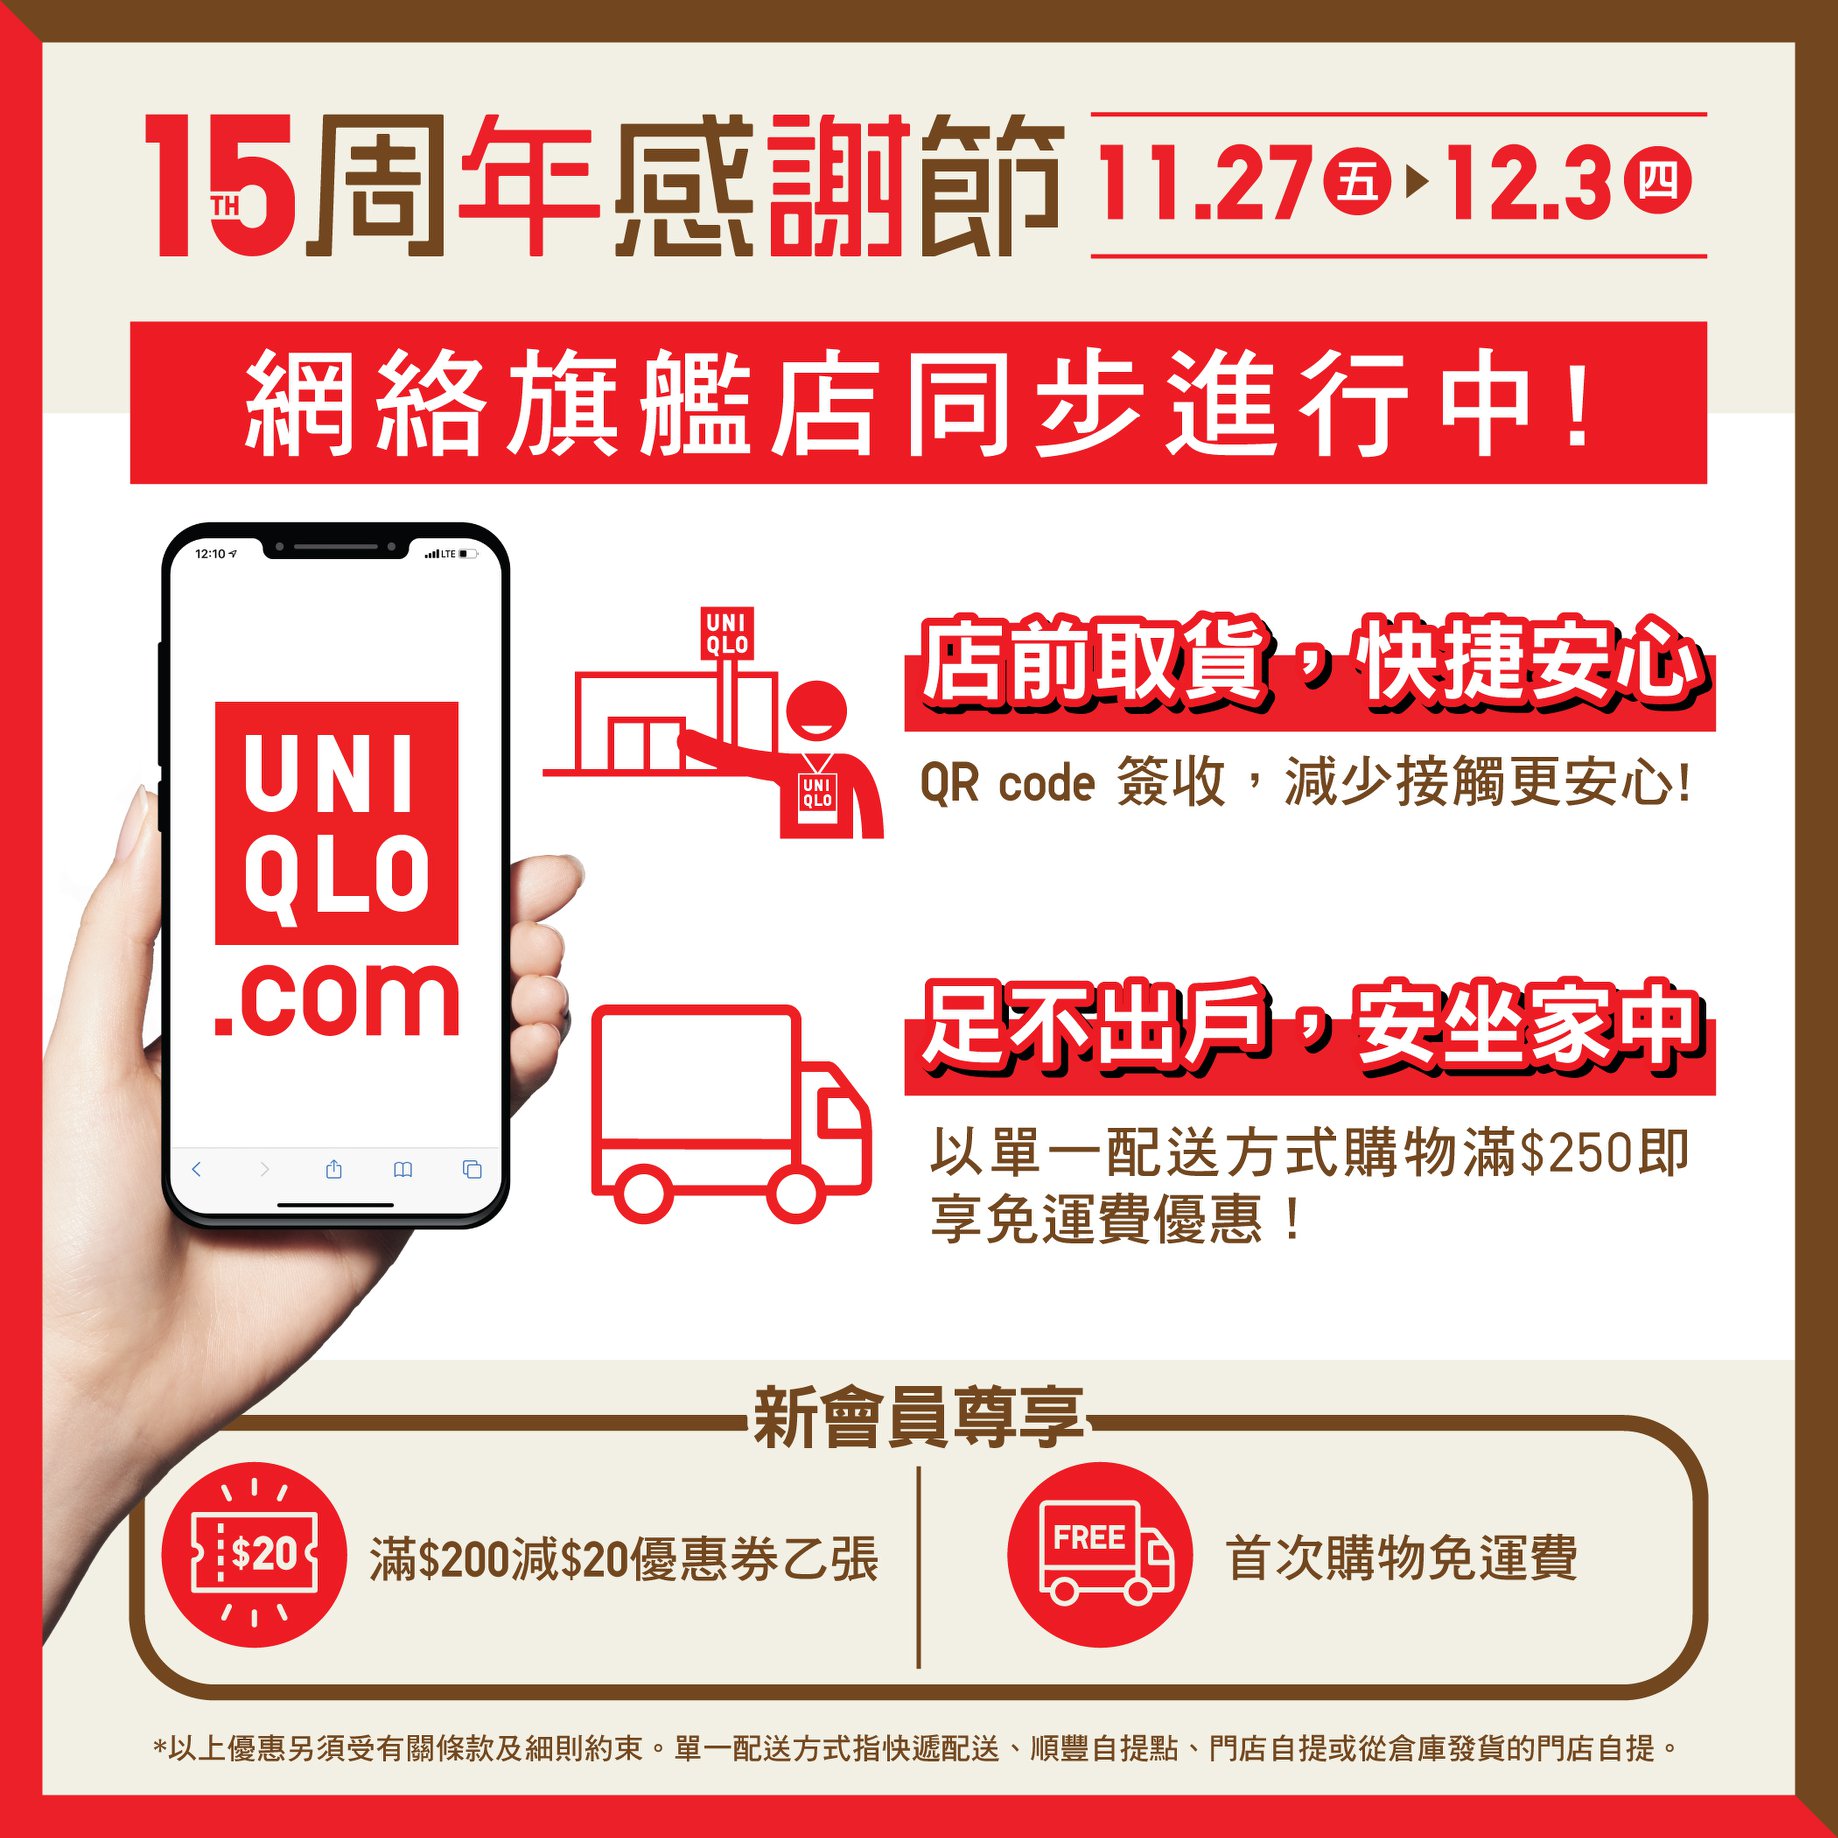 【#UNIQLO15周年感謝節: 網絡旗艦店購物體驗📱】